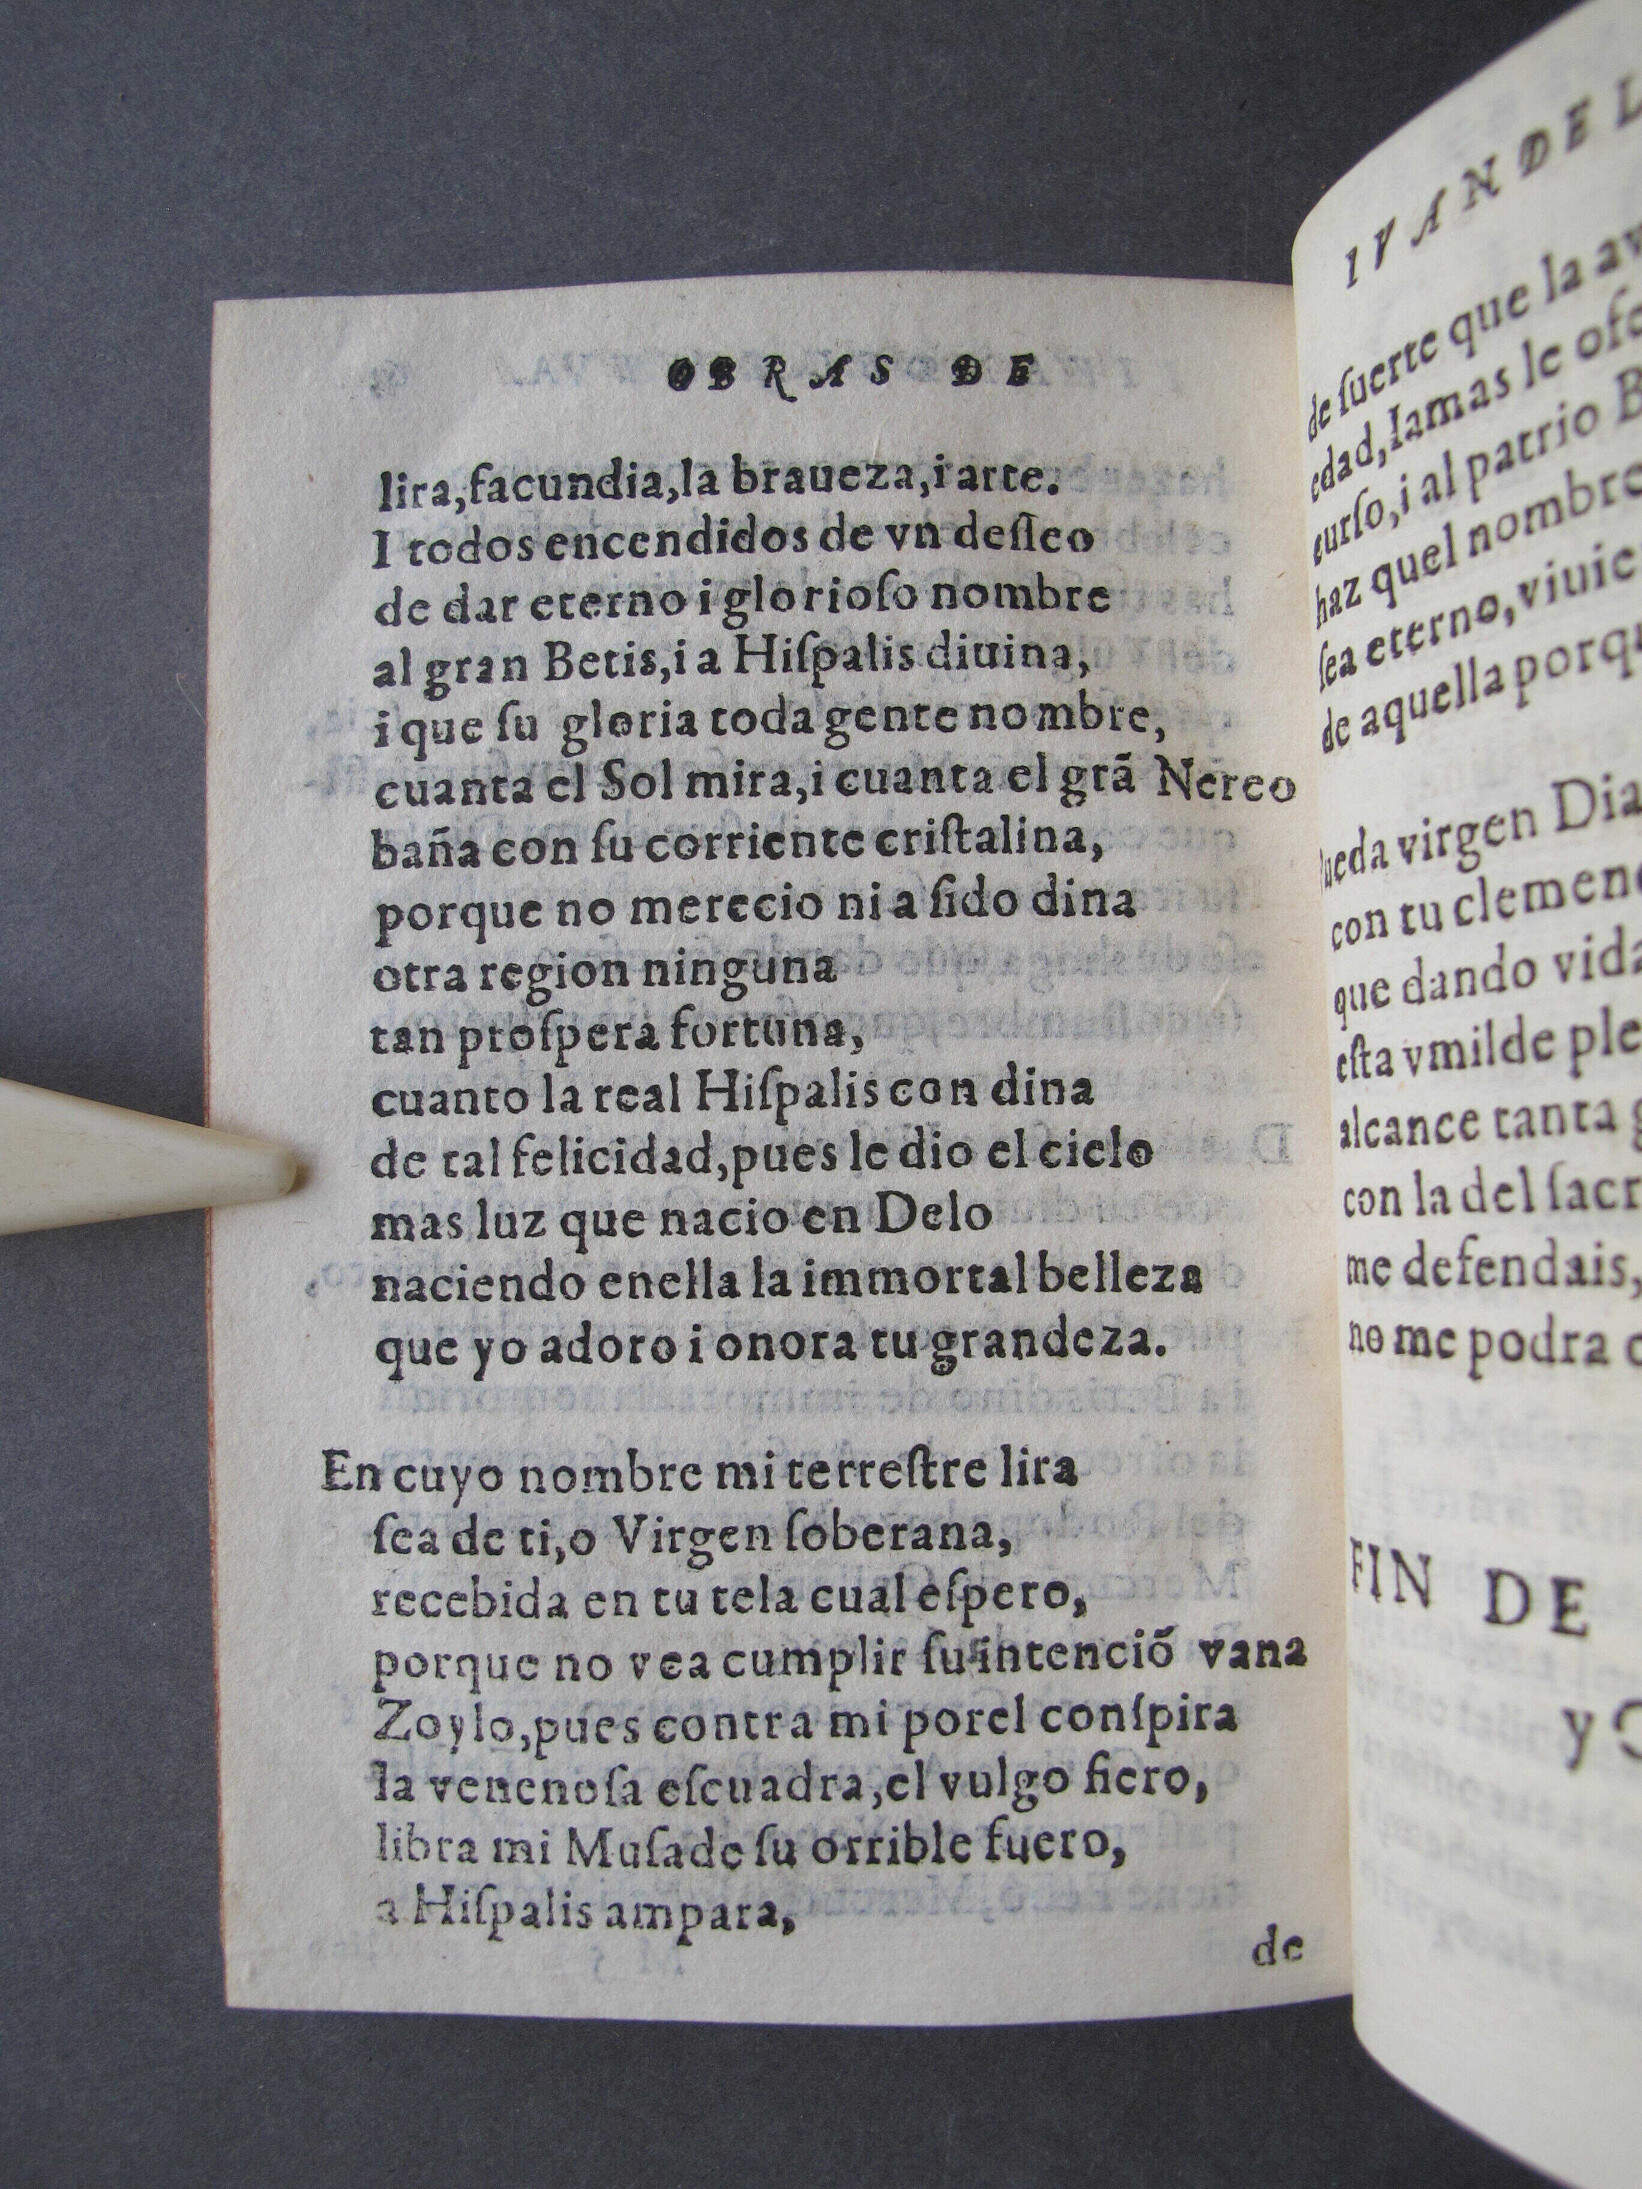 Folio M5 verso